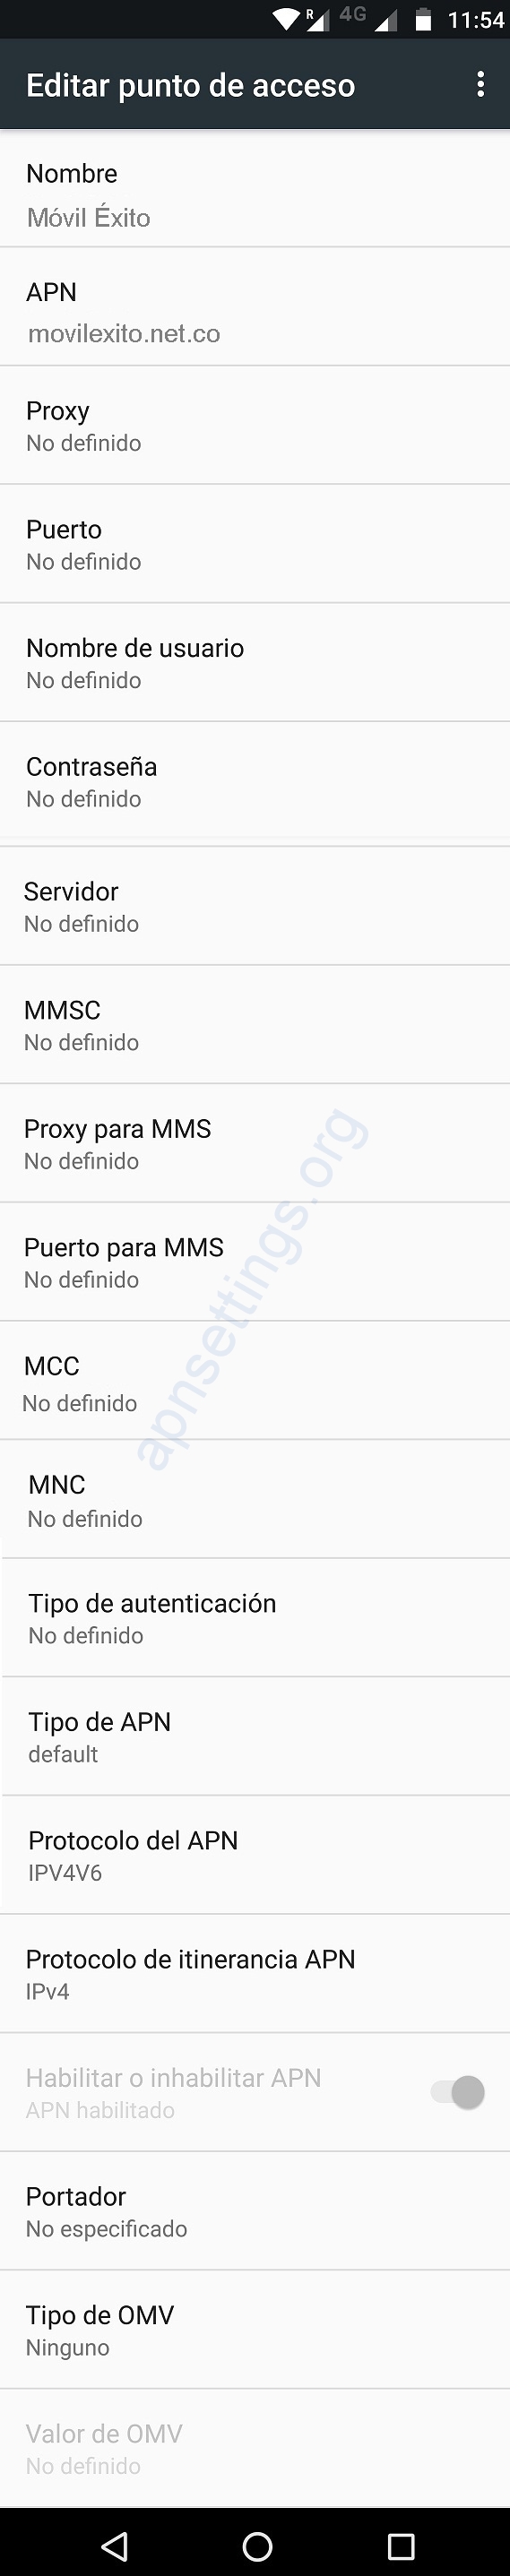 APN 4G de Móvil Éxito Colombia Android